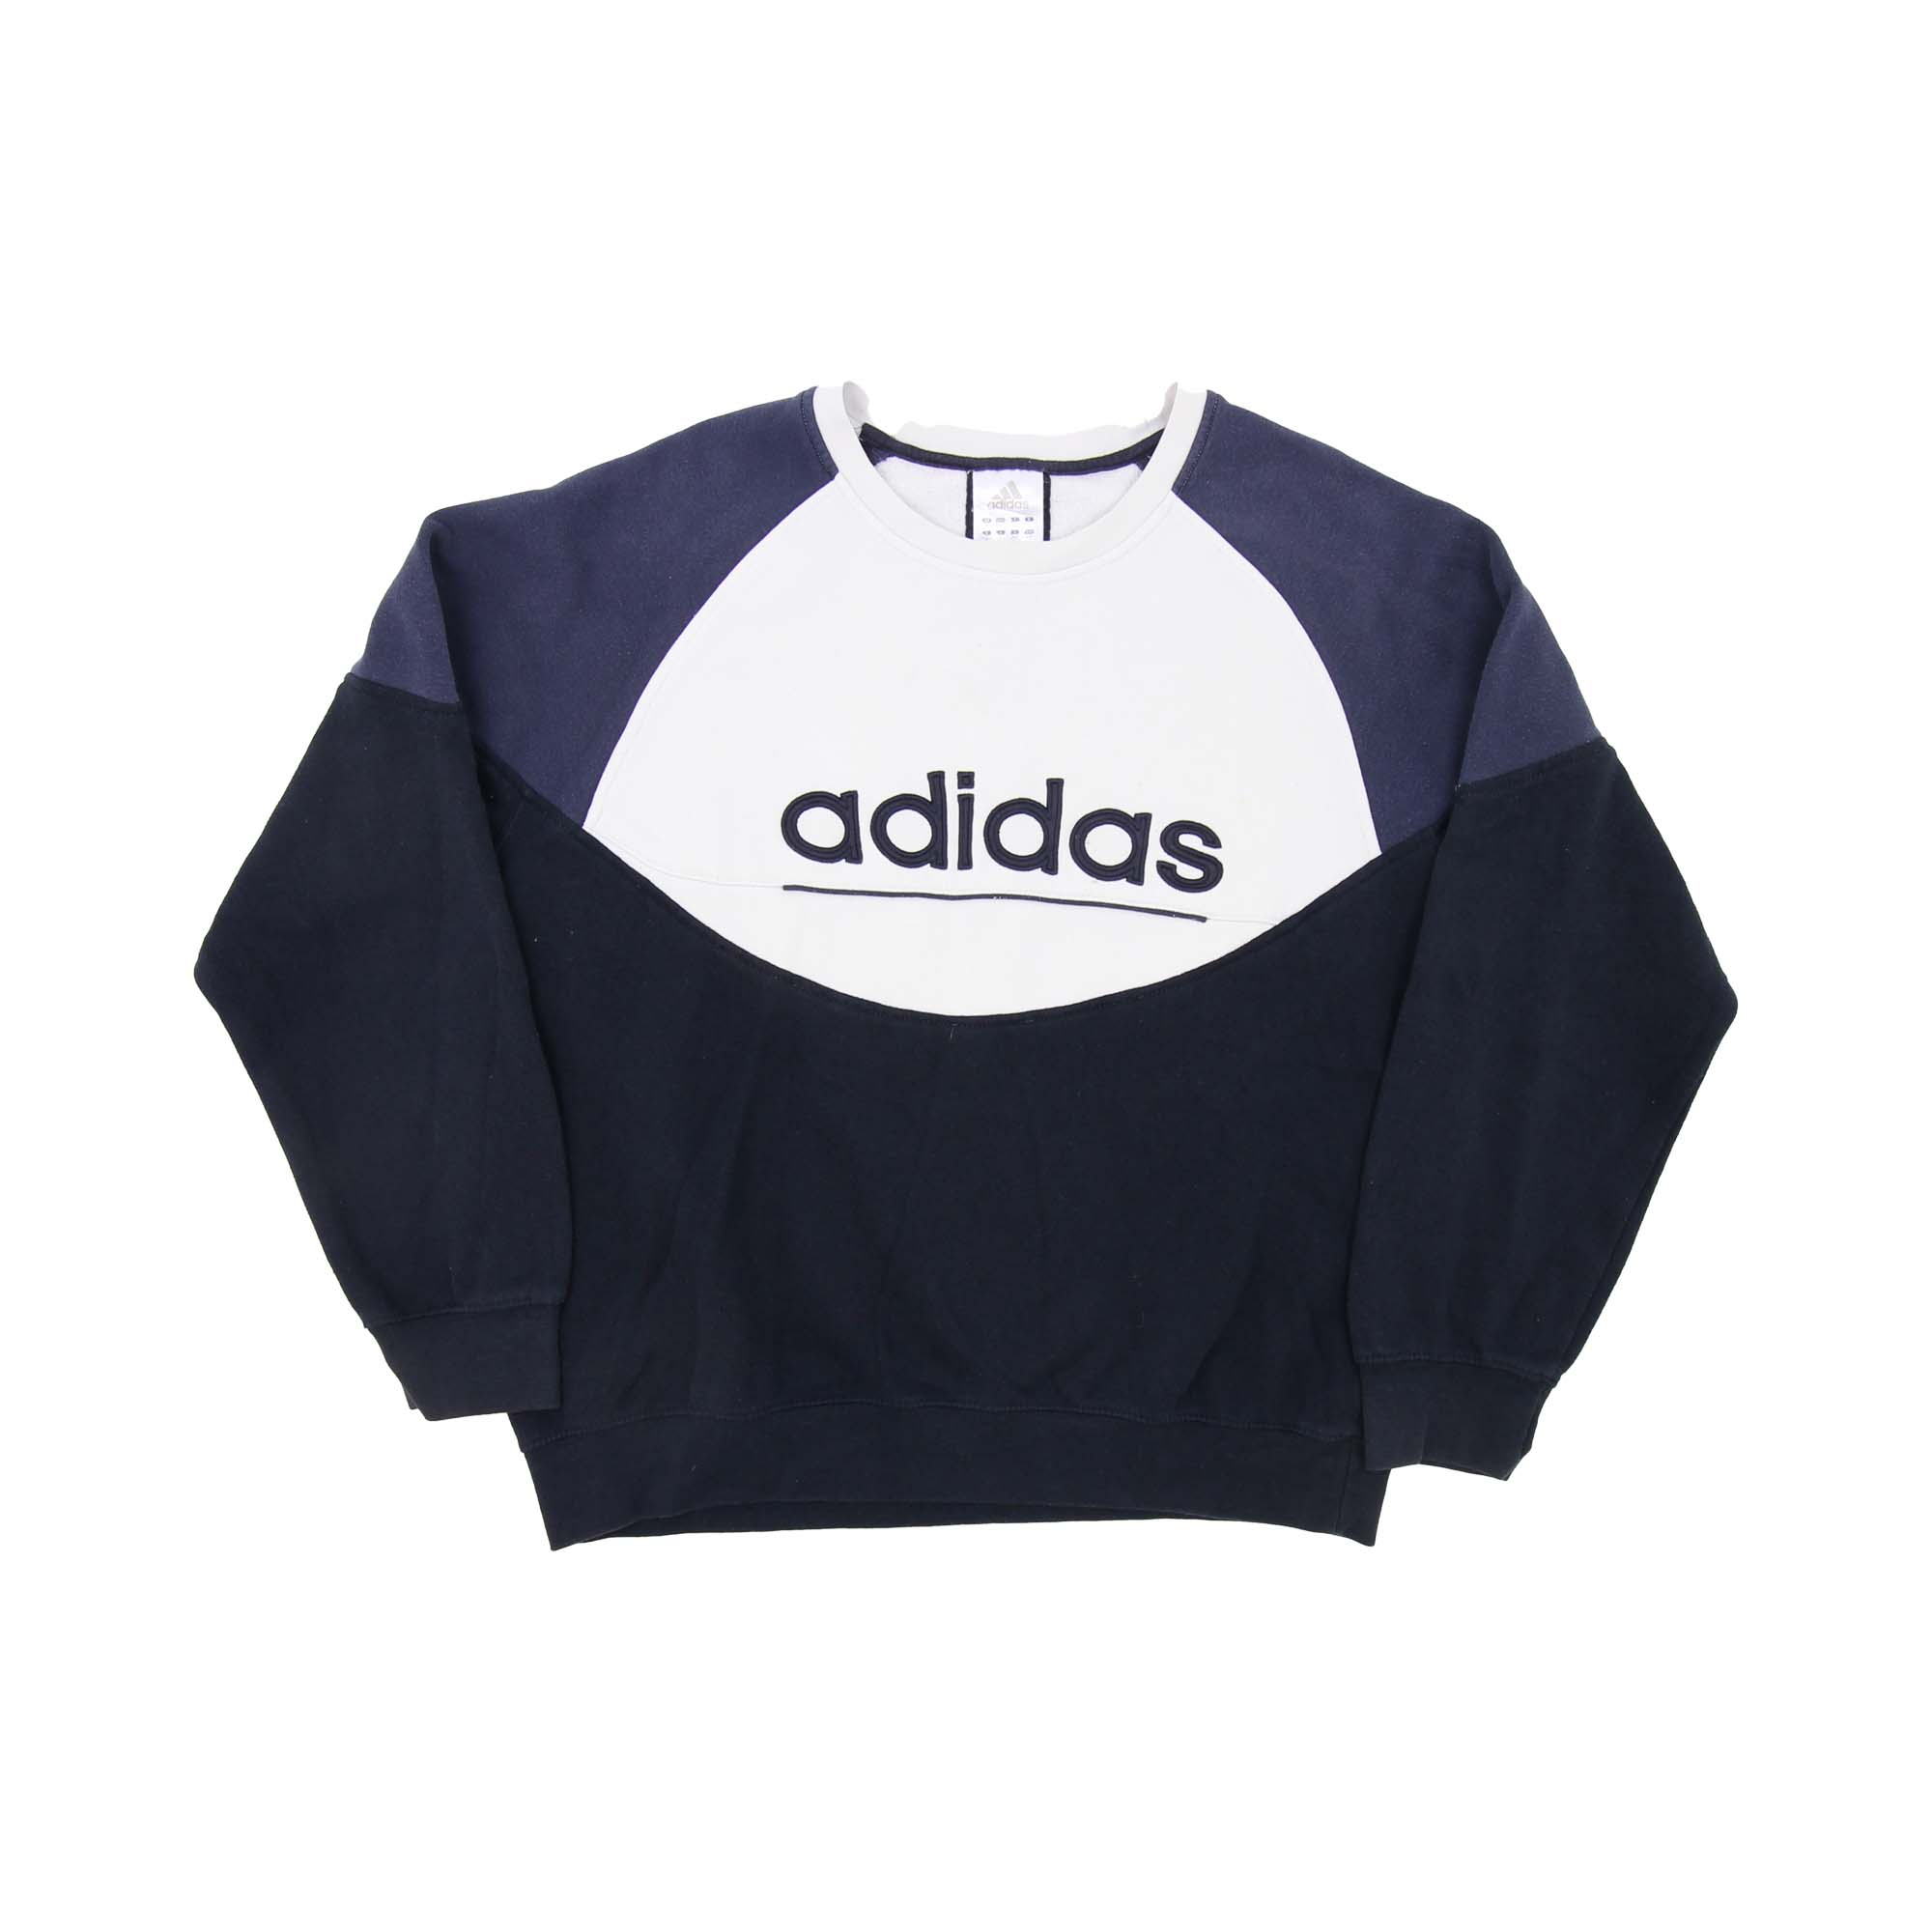 Adidas Rework Sweatshirt  -   M